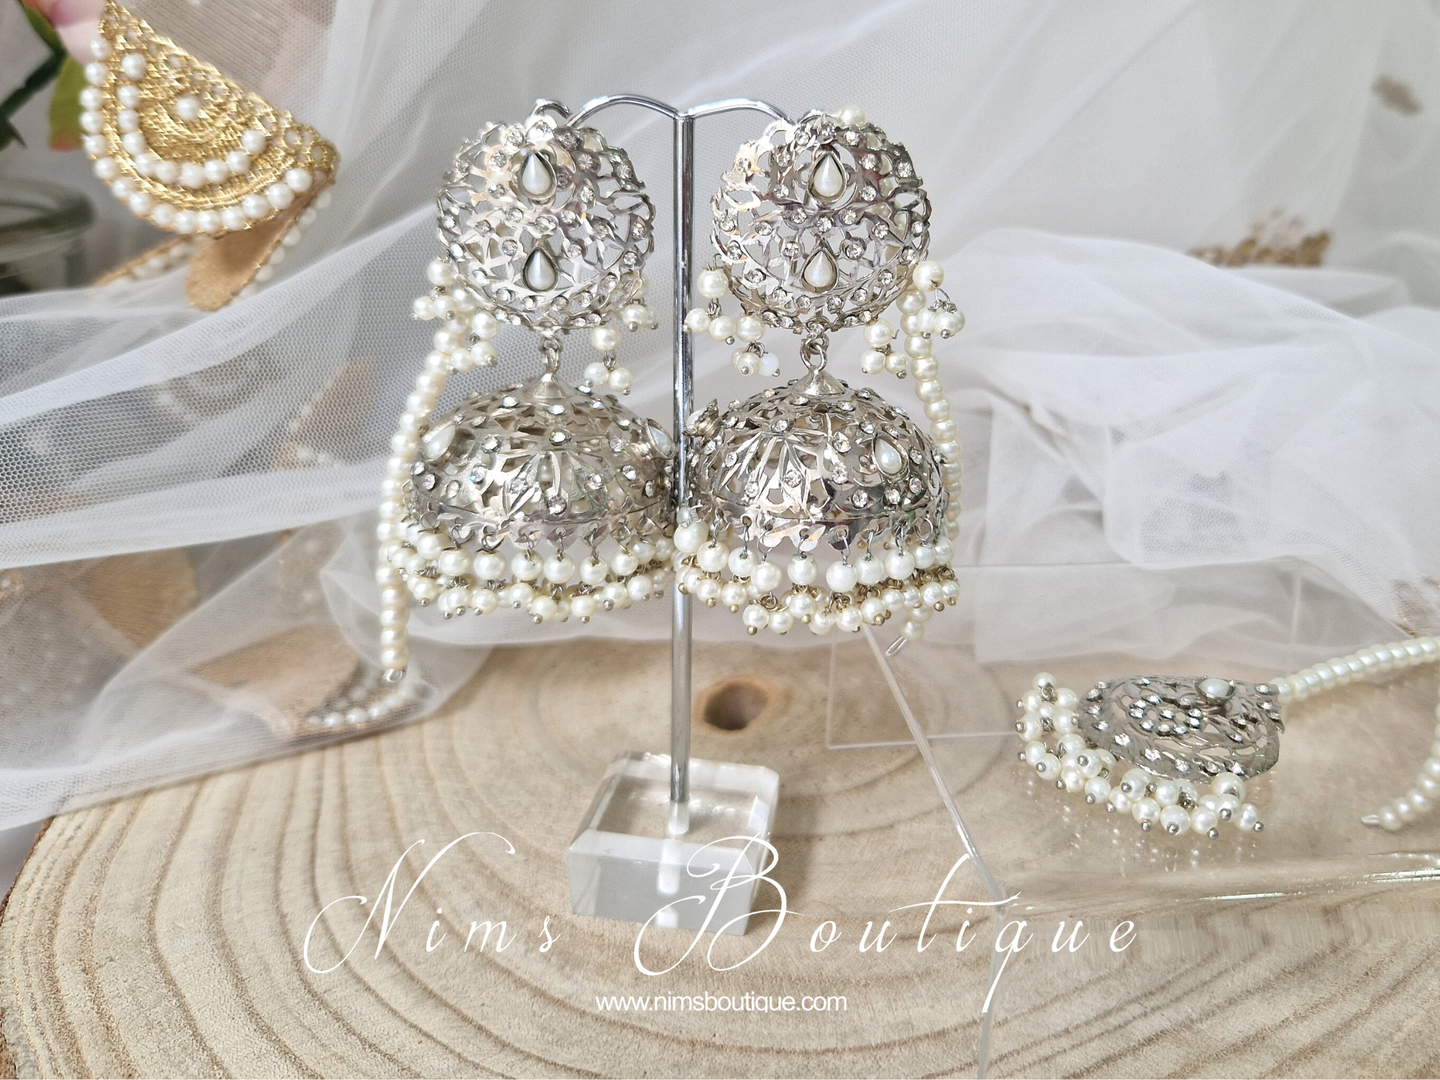 Mughal Silver & Pearl Earrings & Tikka Set